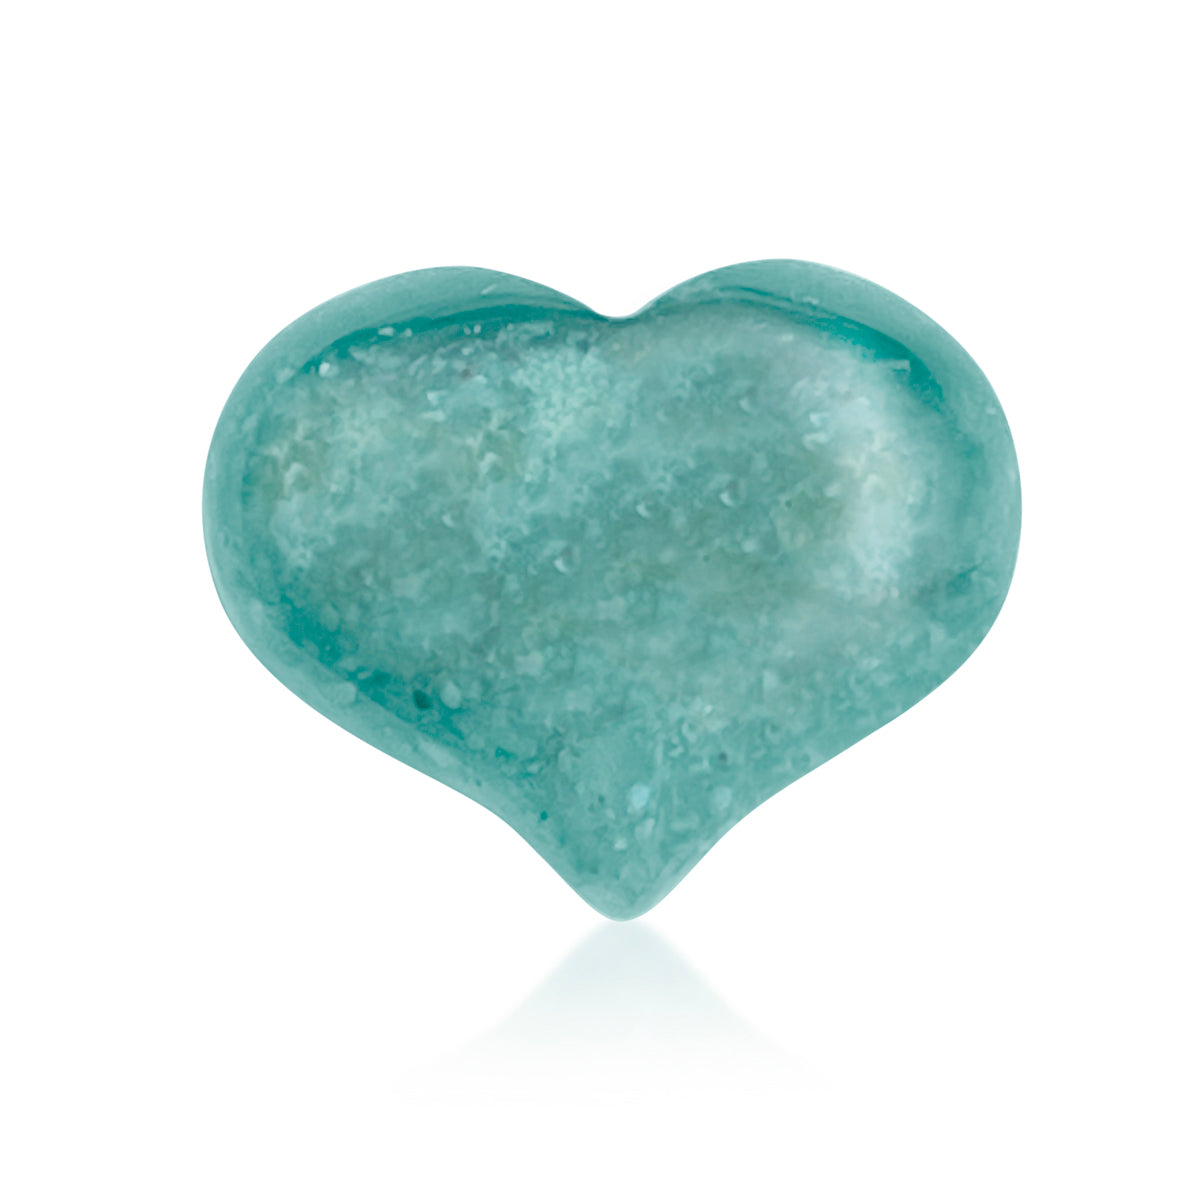 Green Aventurine Heart Shaped Healing Gemstone for Opportunity